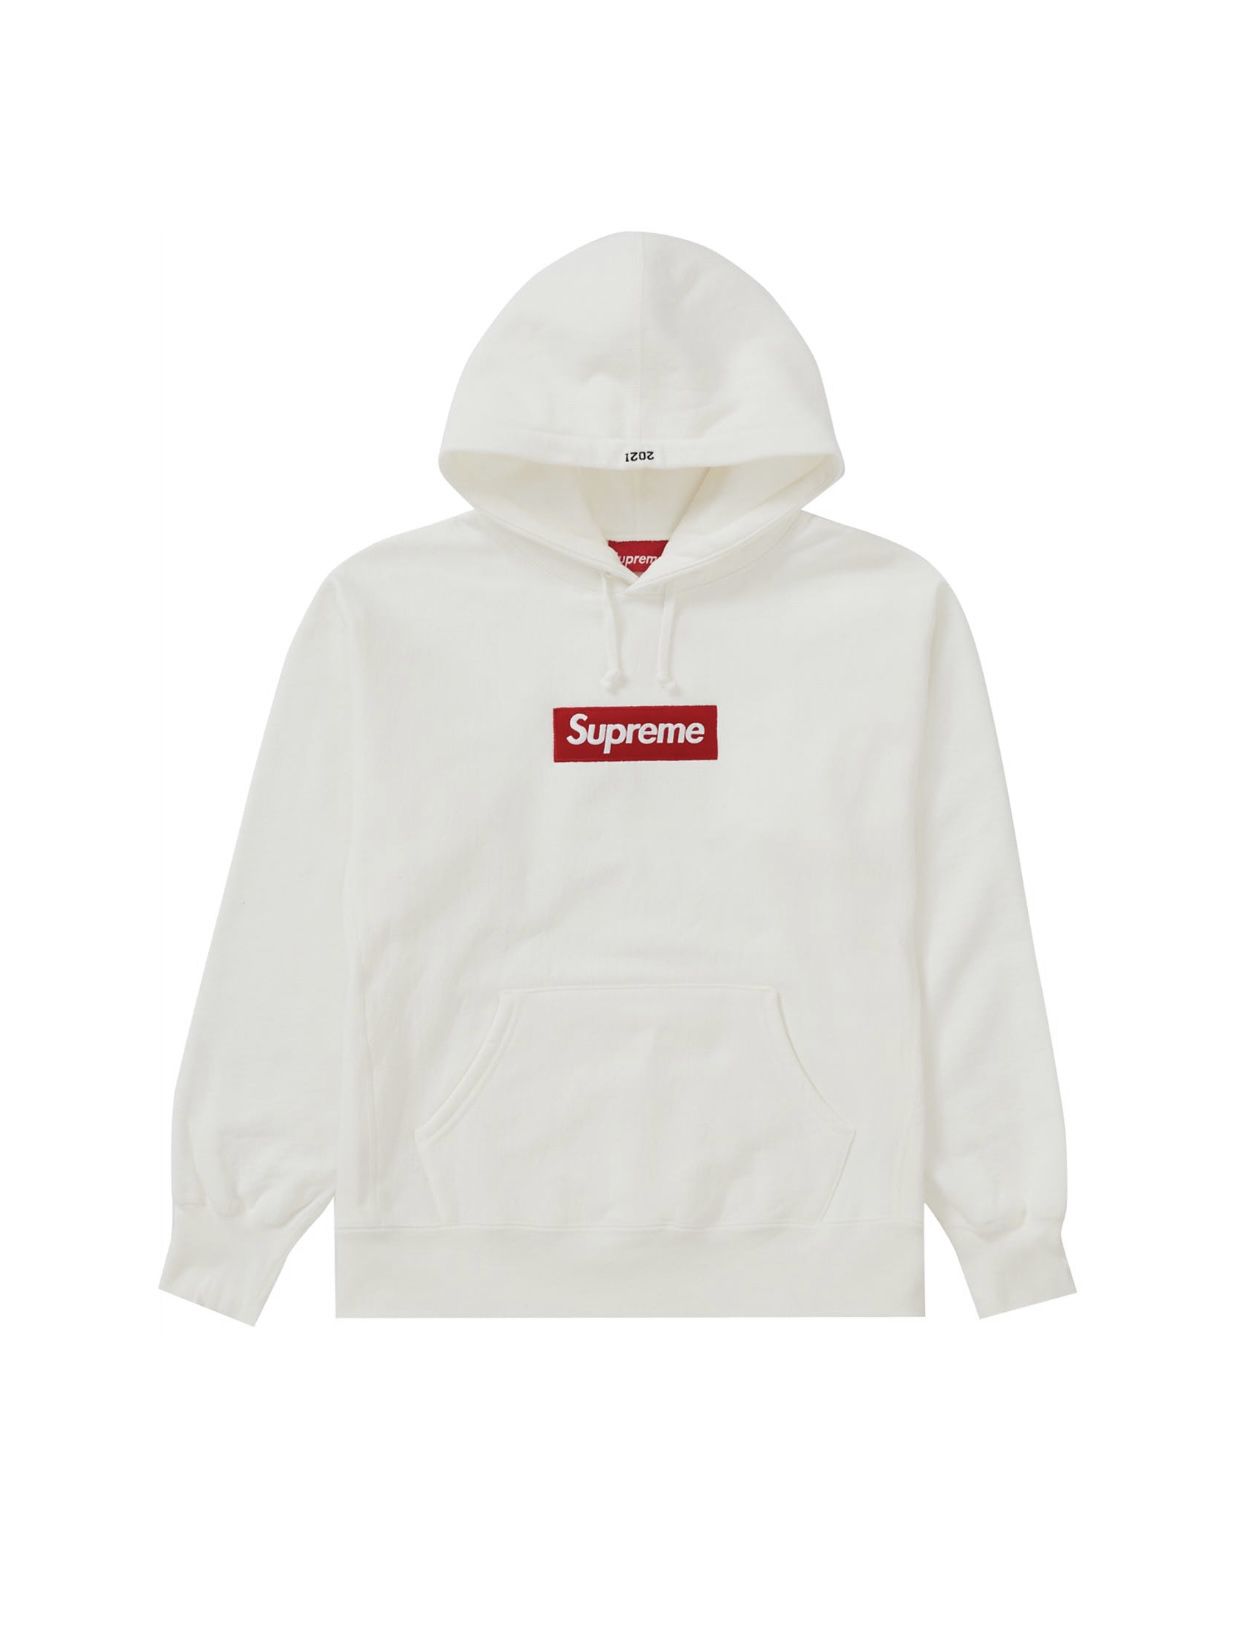 Brand New Supreme Box Logo Hoodie “White” Size Medium